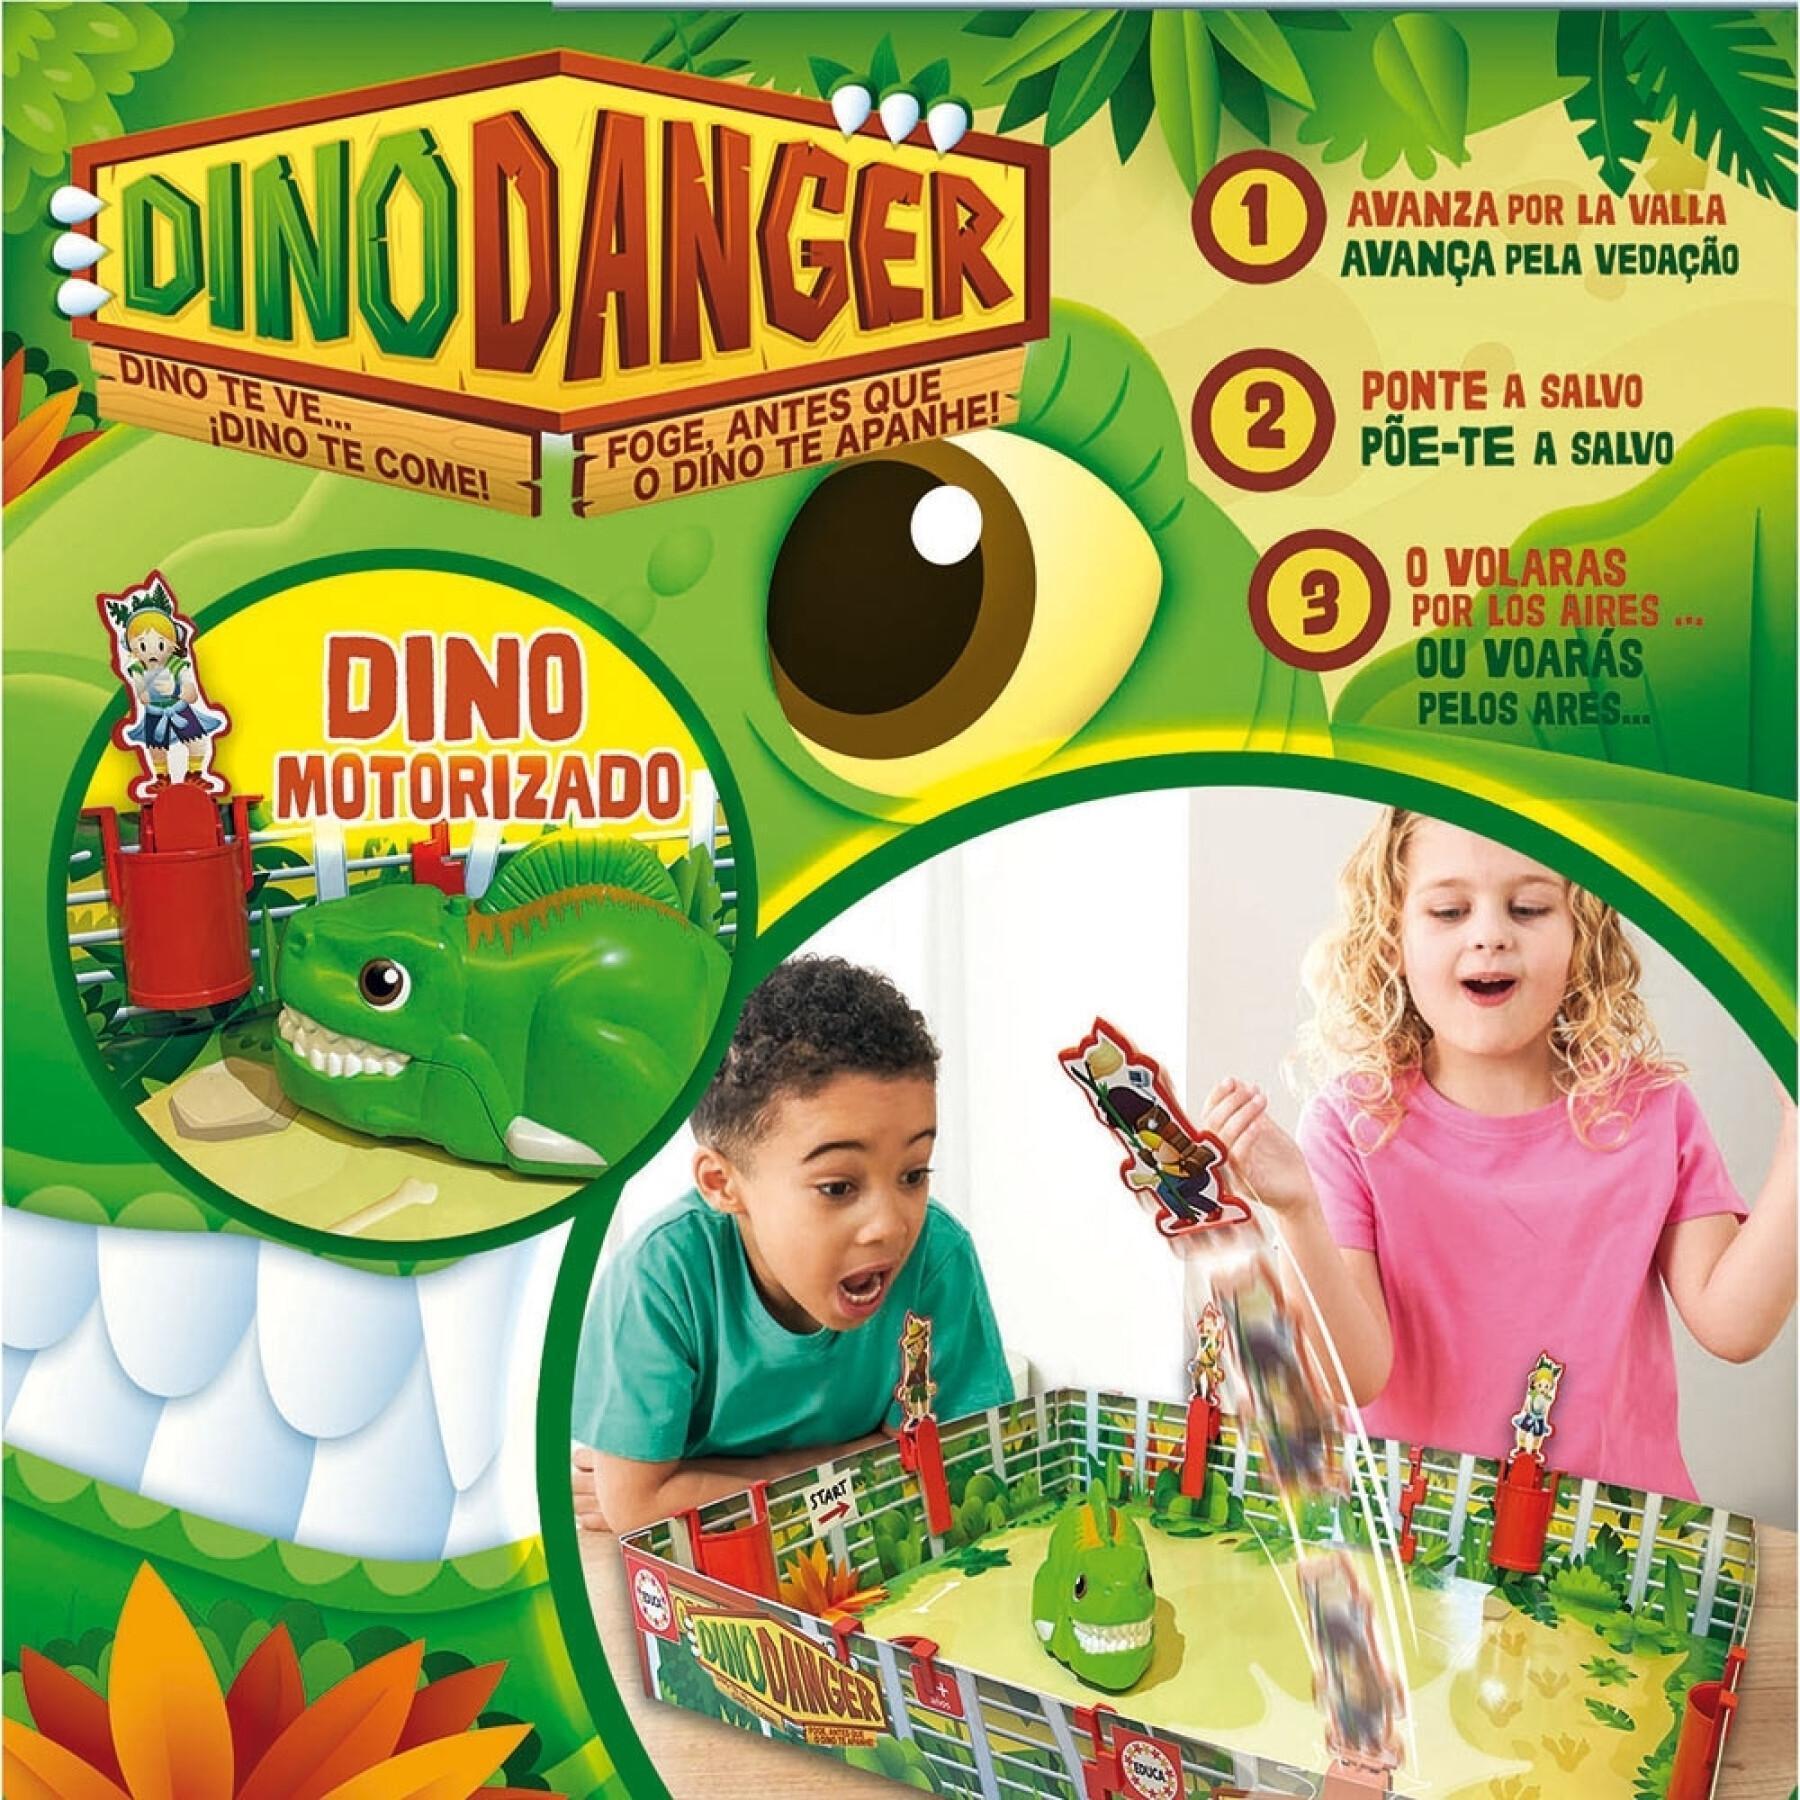 Games of skill Educa Dino Danger